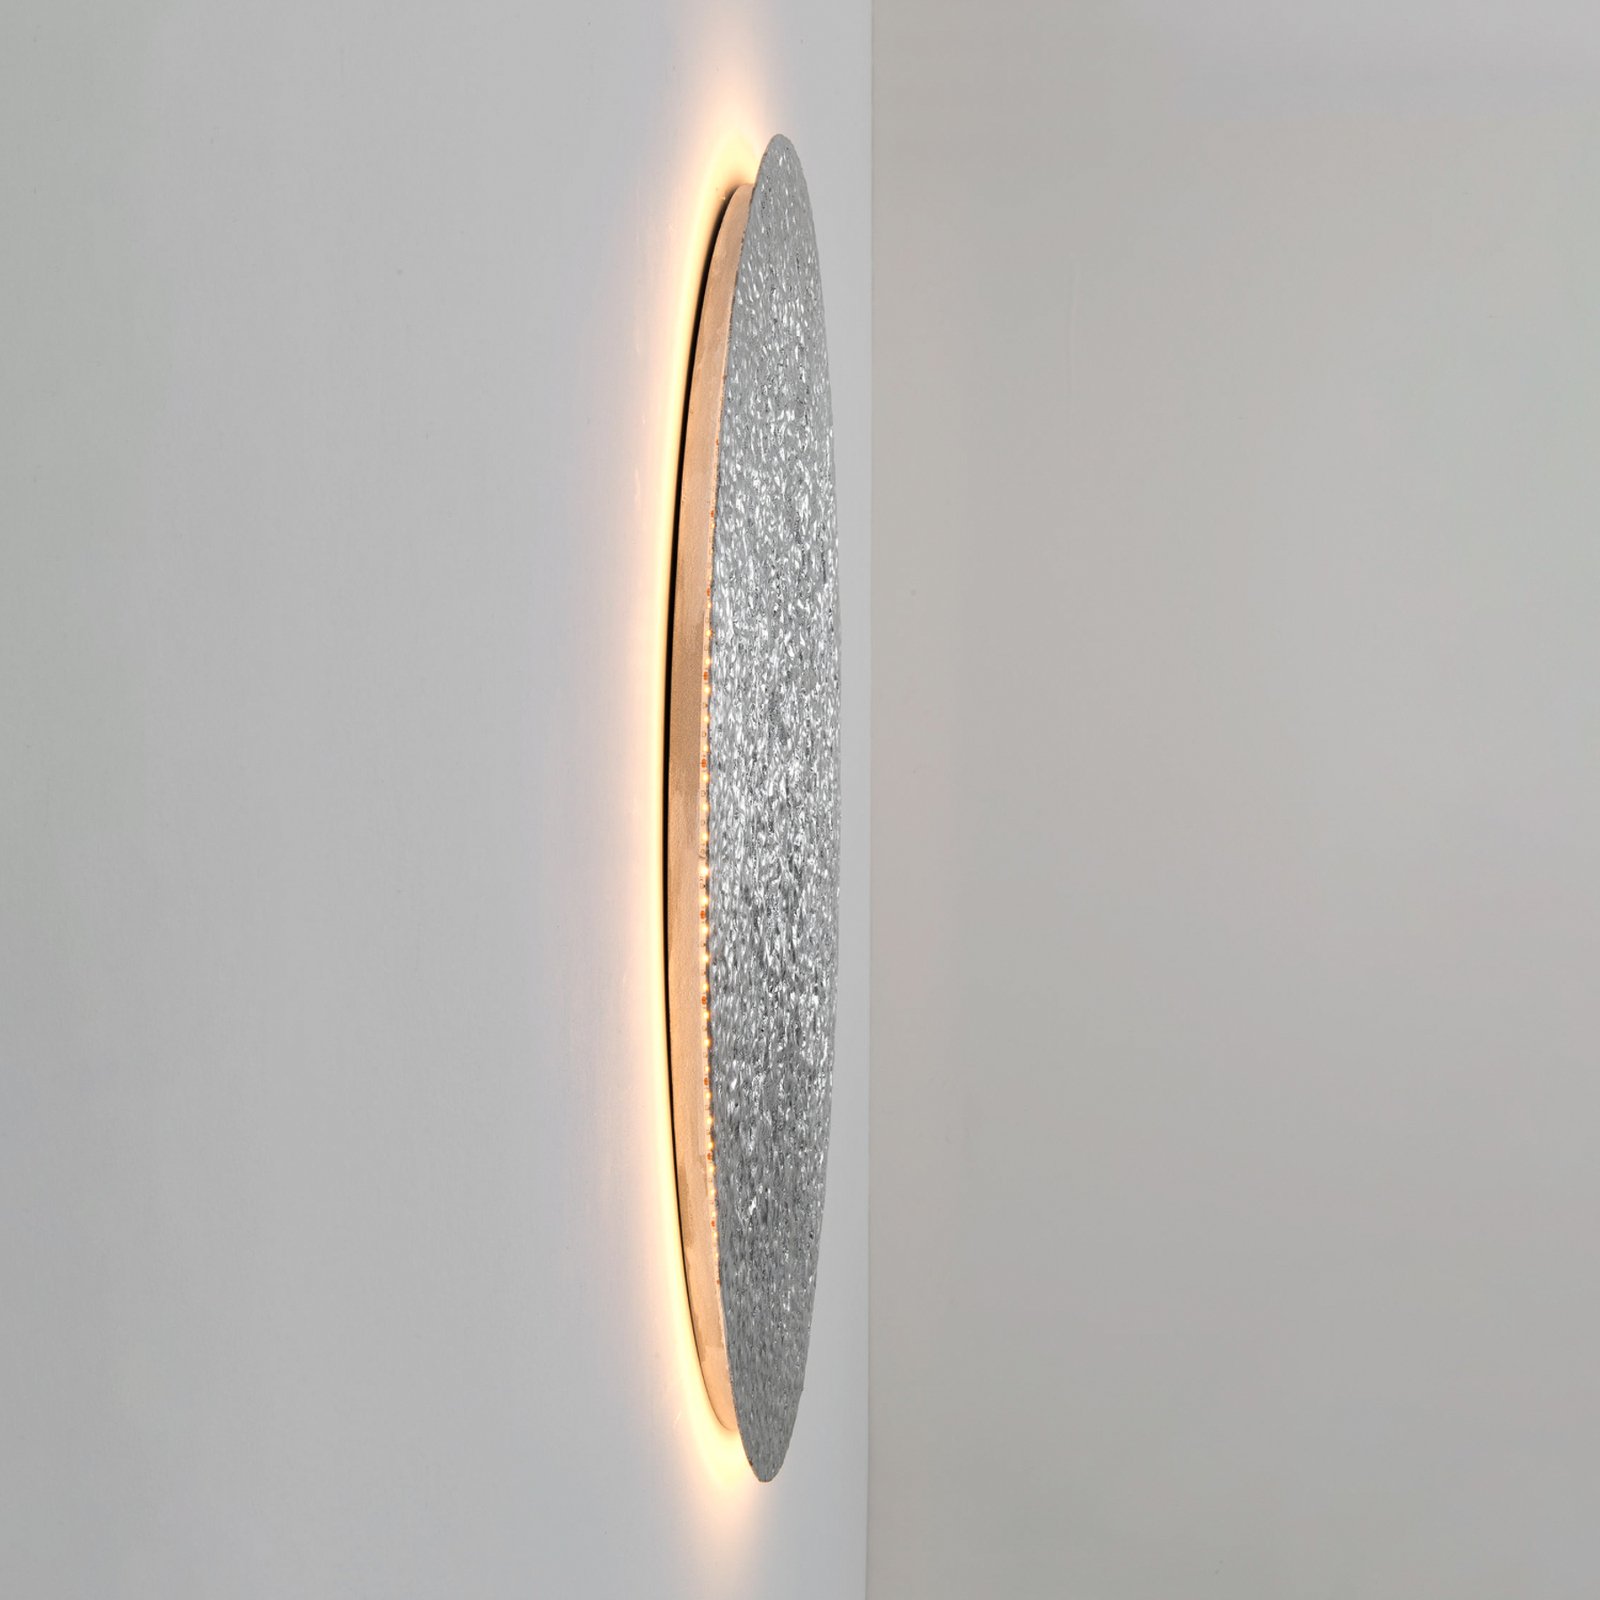 LED-vägglampa Meteor, silverfärgad, Ø 100 cm, järn